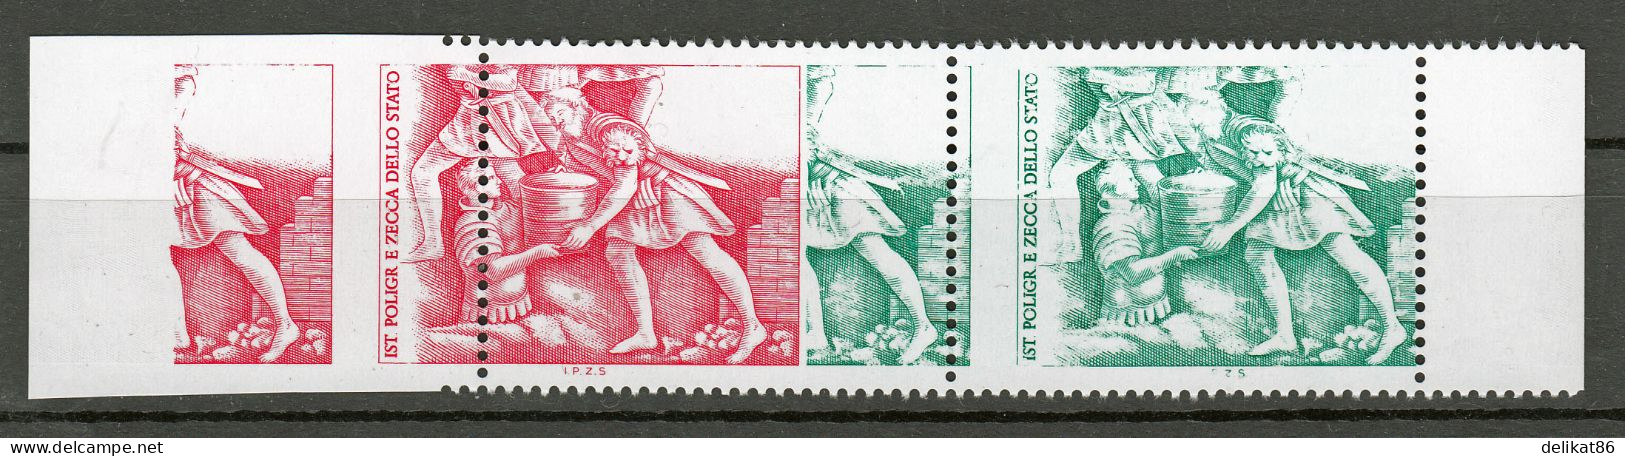 Probedruck Test Stamp Specimen Prove Istituto Poligrafico dello Stato 2003